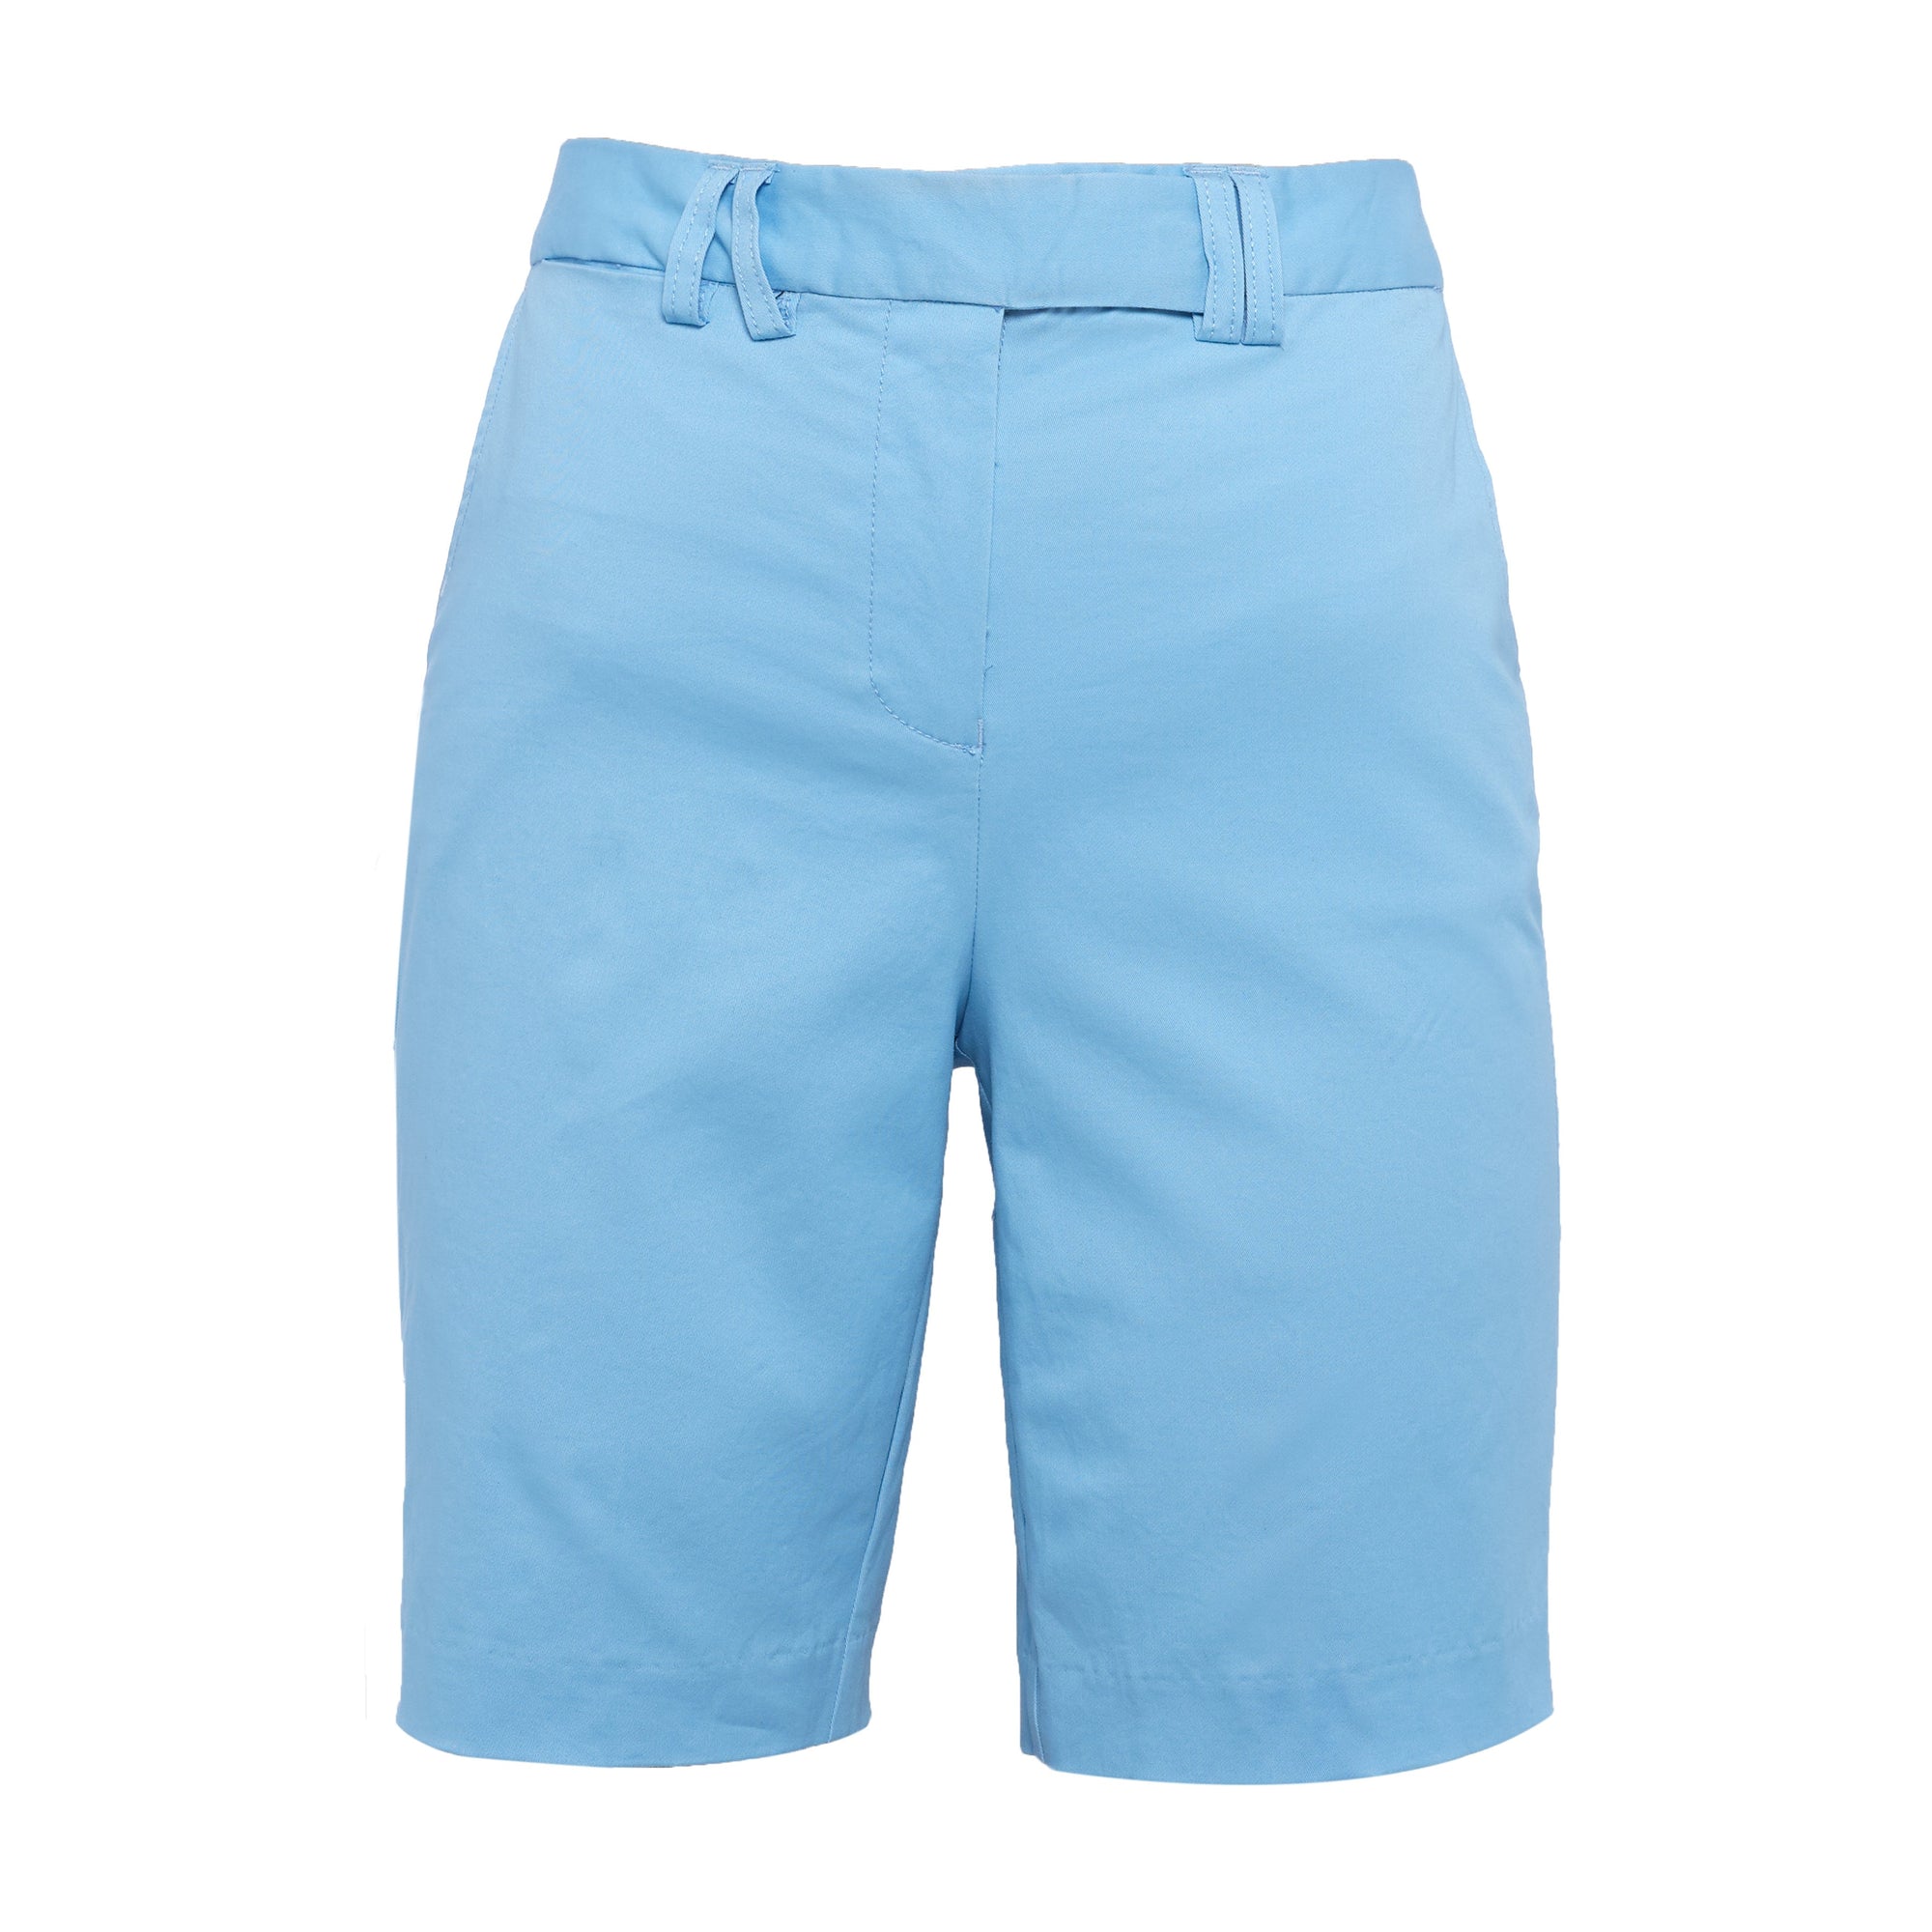 TABS womens 9" Bermuda shorts - bluebird